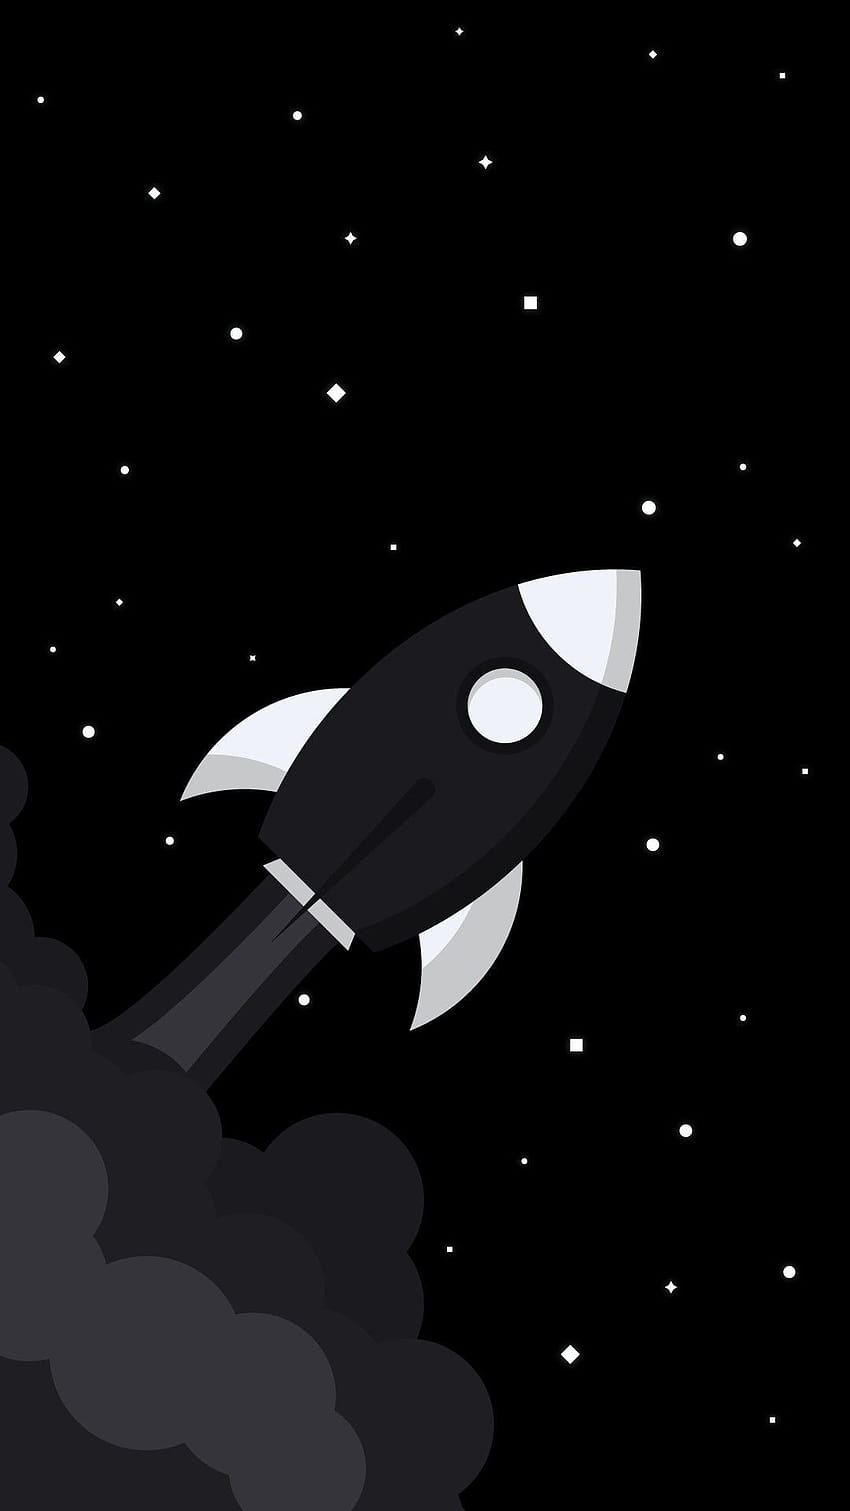 Black Rocket in Space, roket hitam minimalis wallpaper ponsel HD